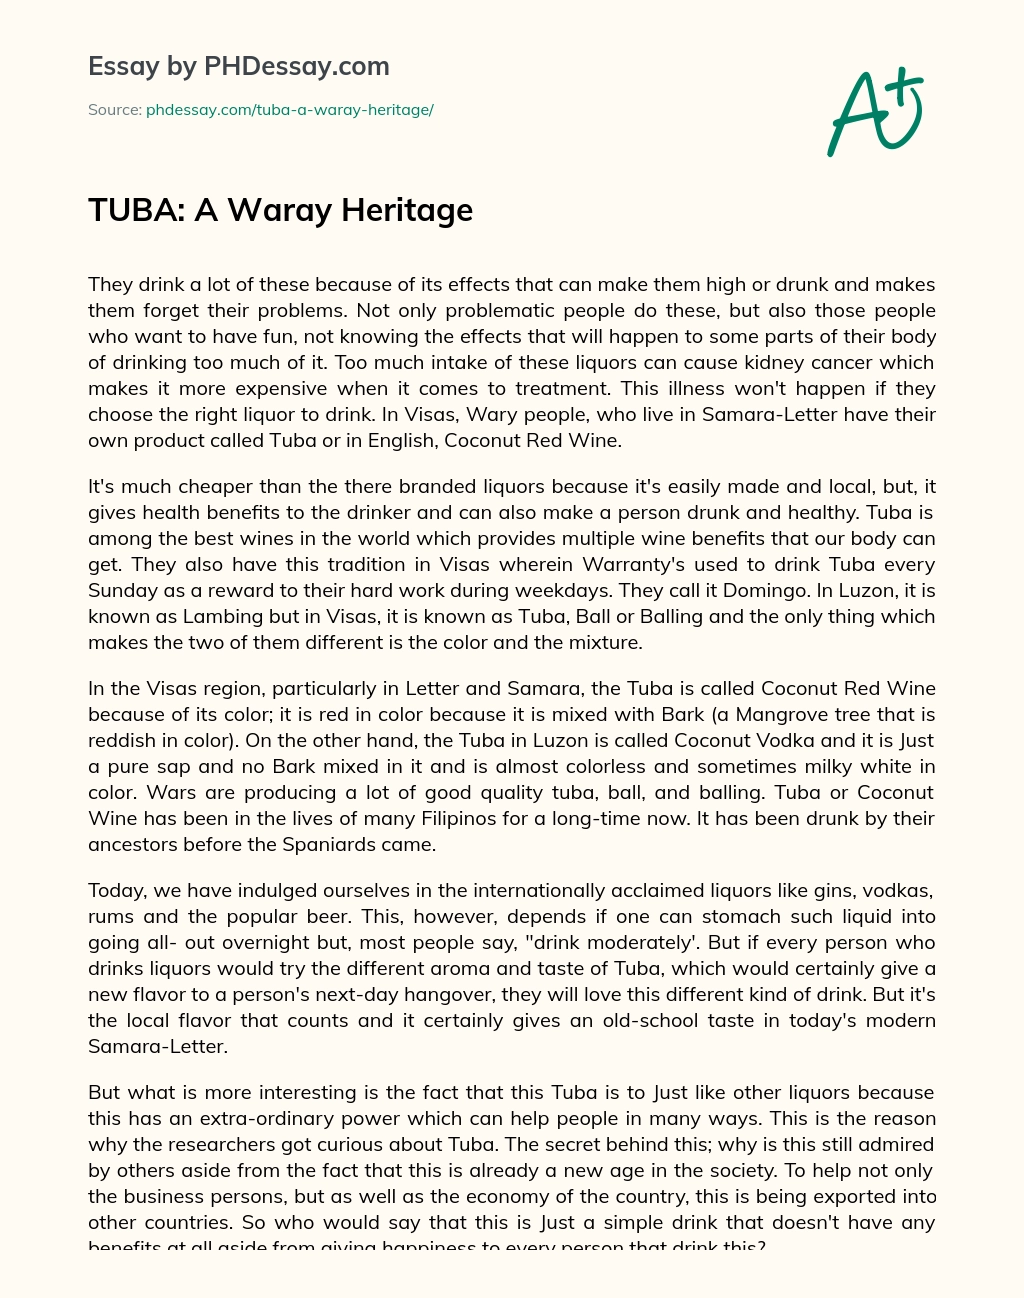 TUBA: A Waray Heritage essay